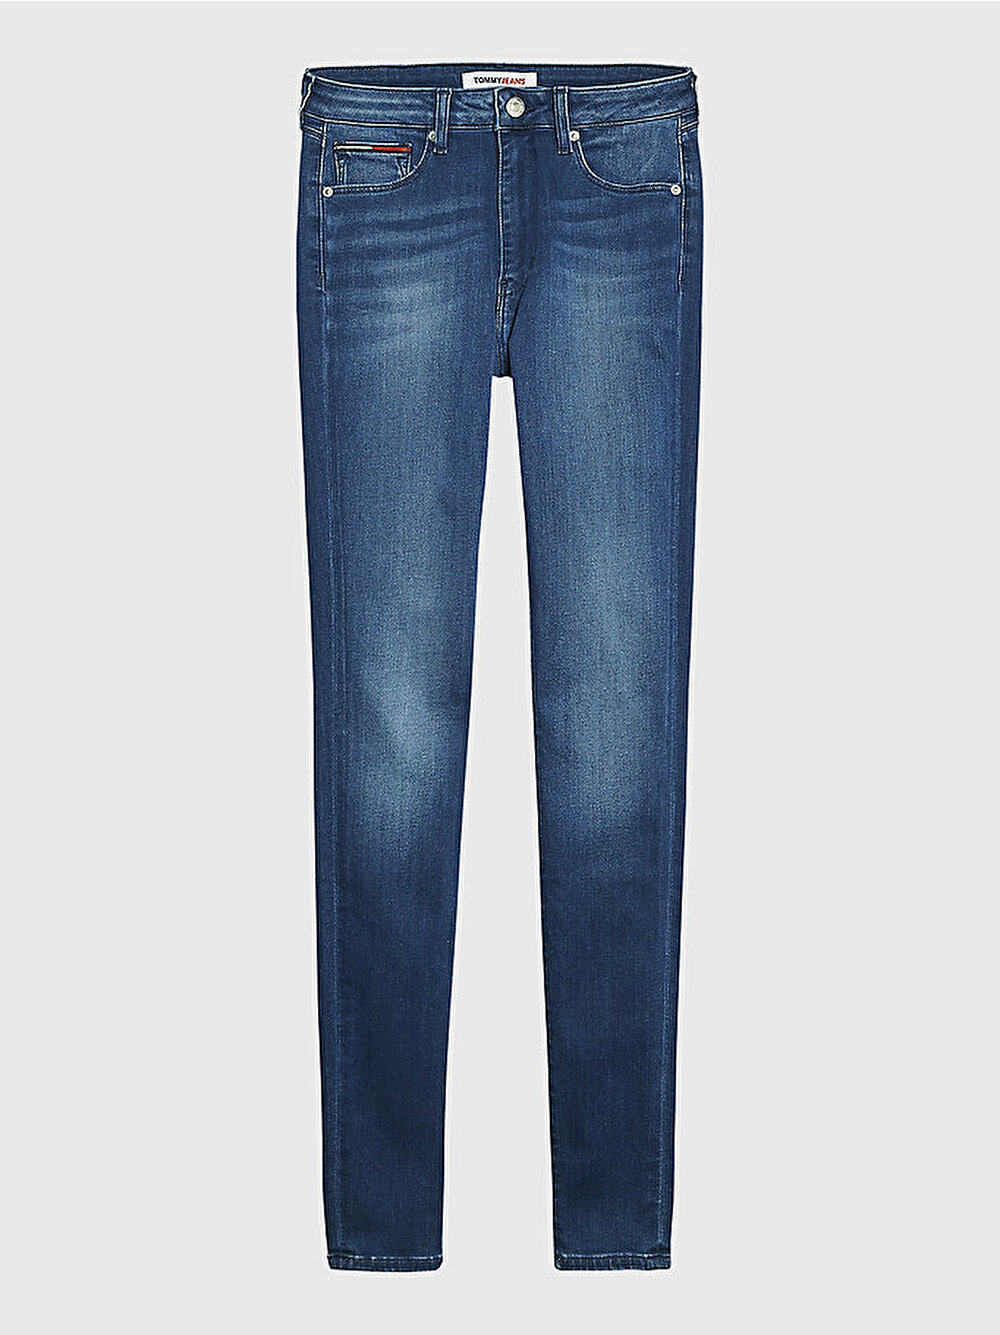 discount 90% Pull&Bear boyfriend jeans Blue 36                  EU WOMEN FASHION Jeans Boyfriend jeans Print 